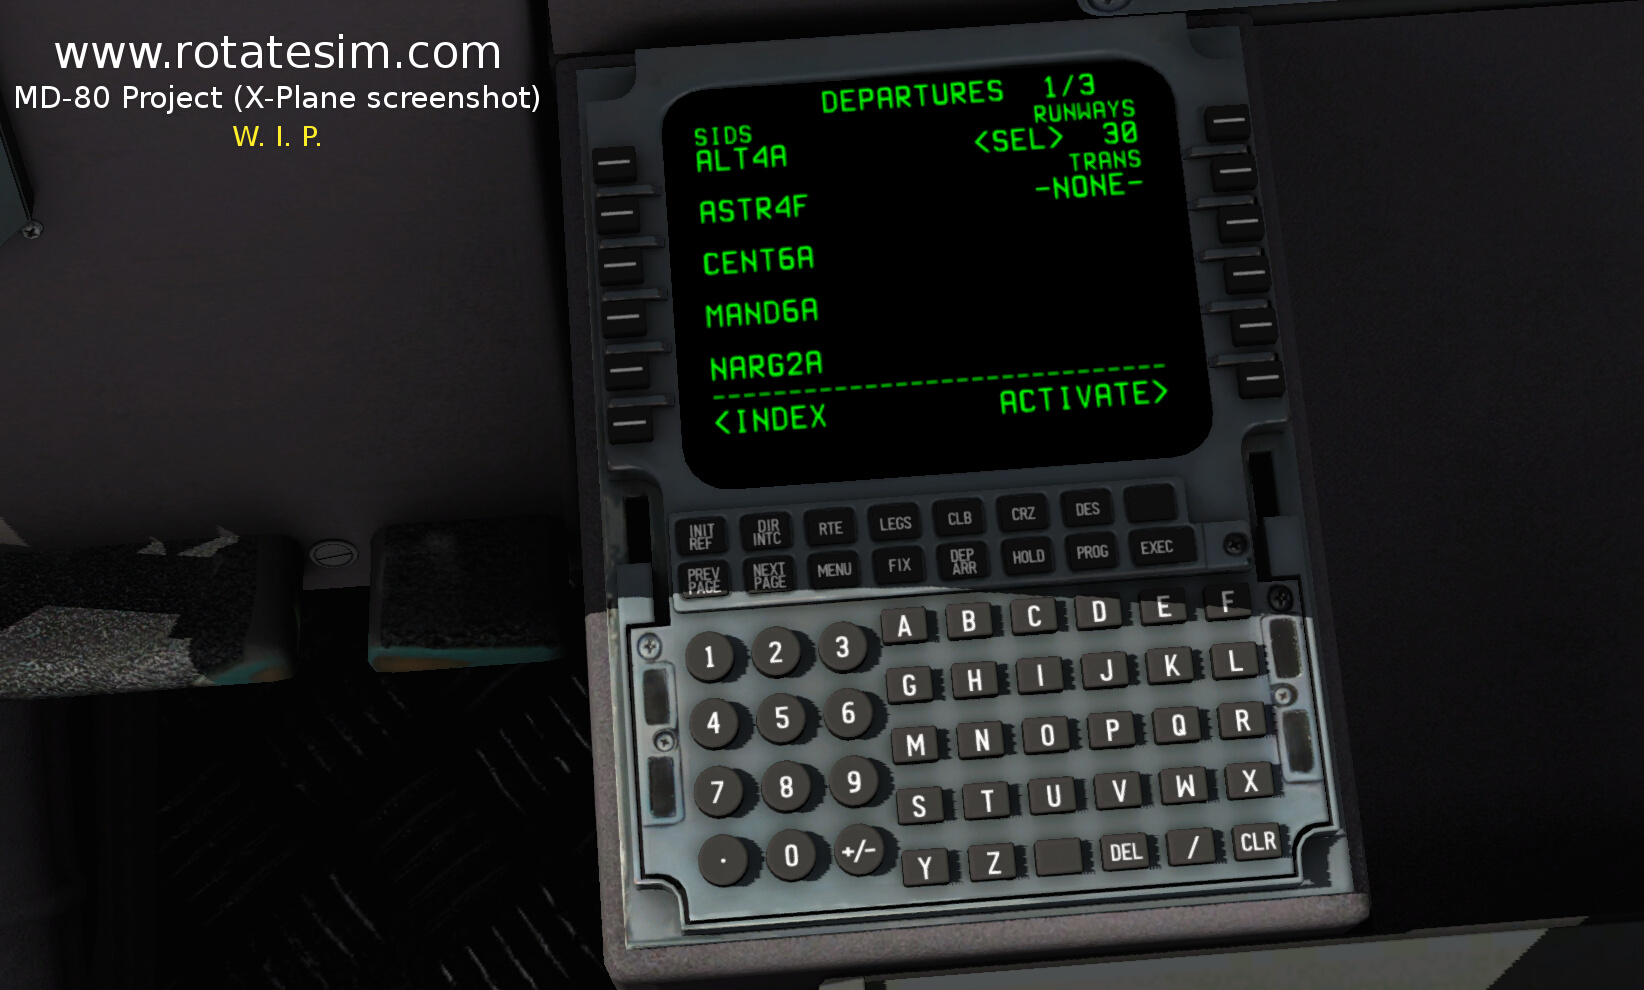 MD-80 screenshot FMC 04 DEPARTURES SIDS